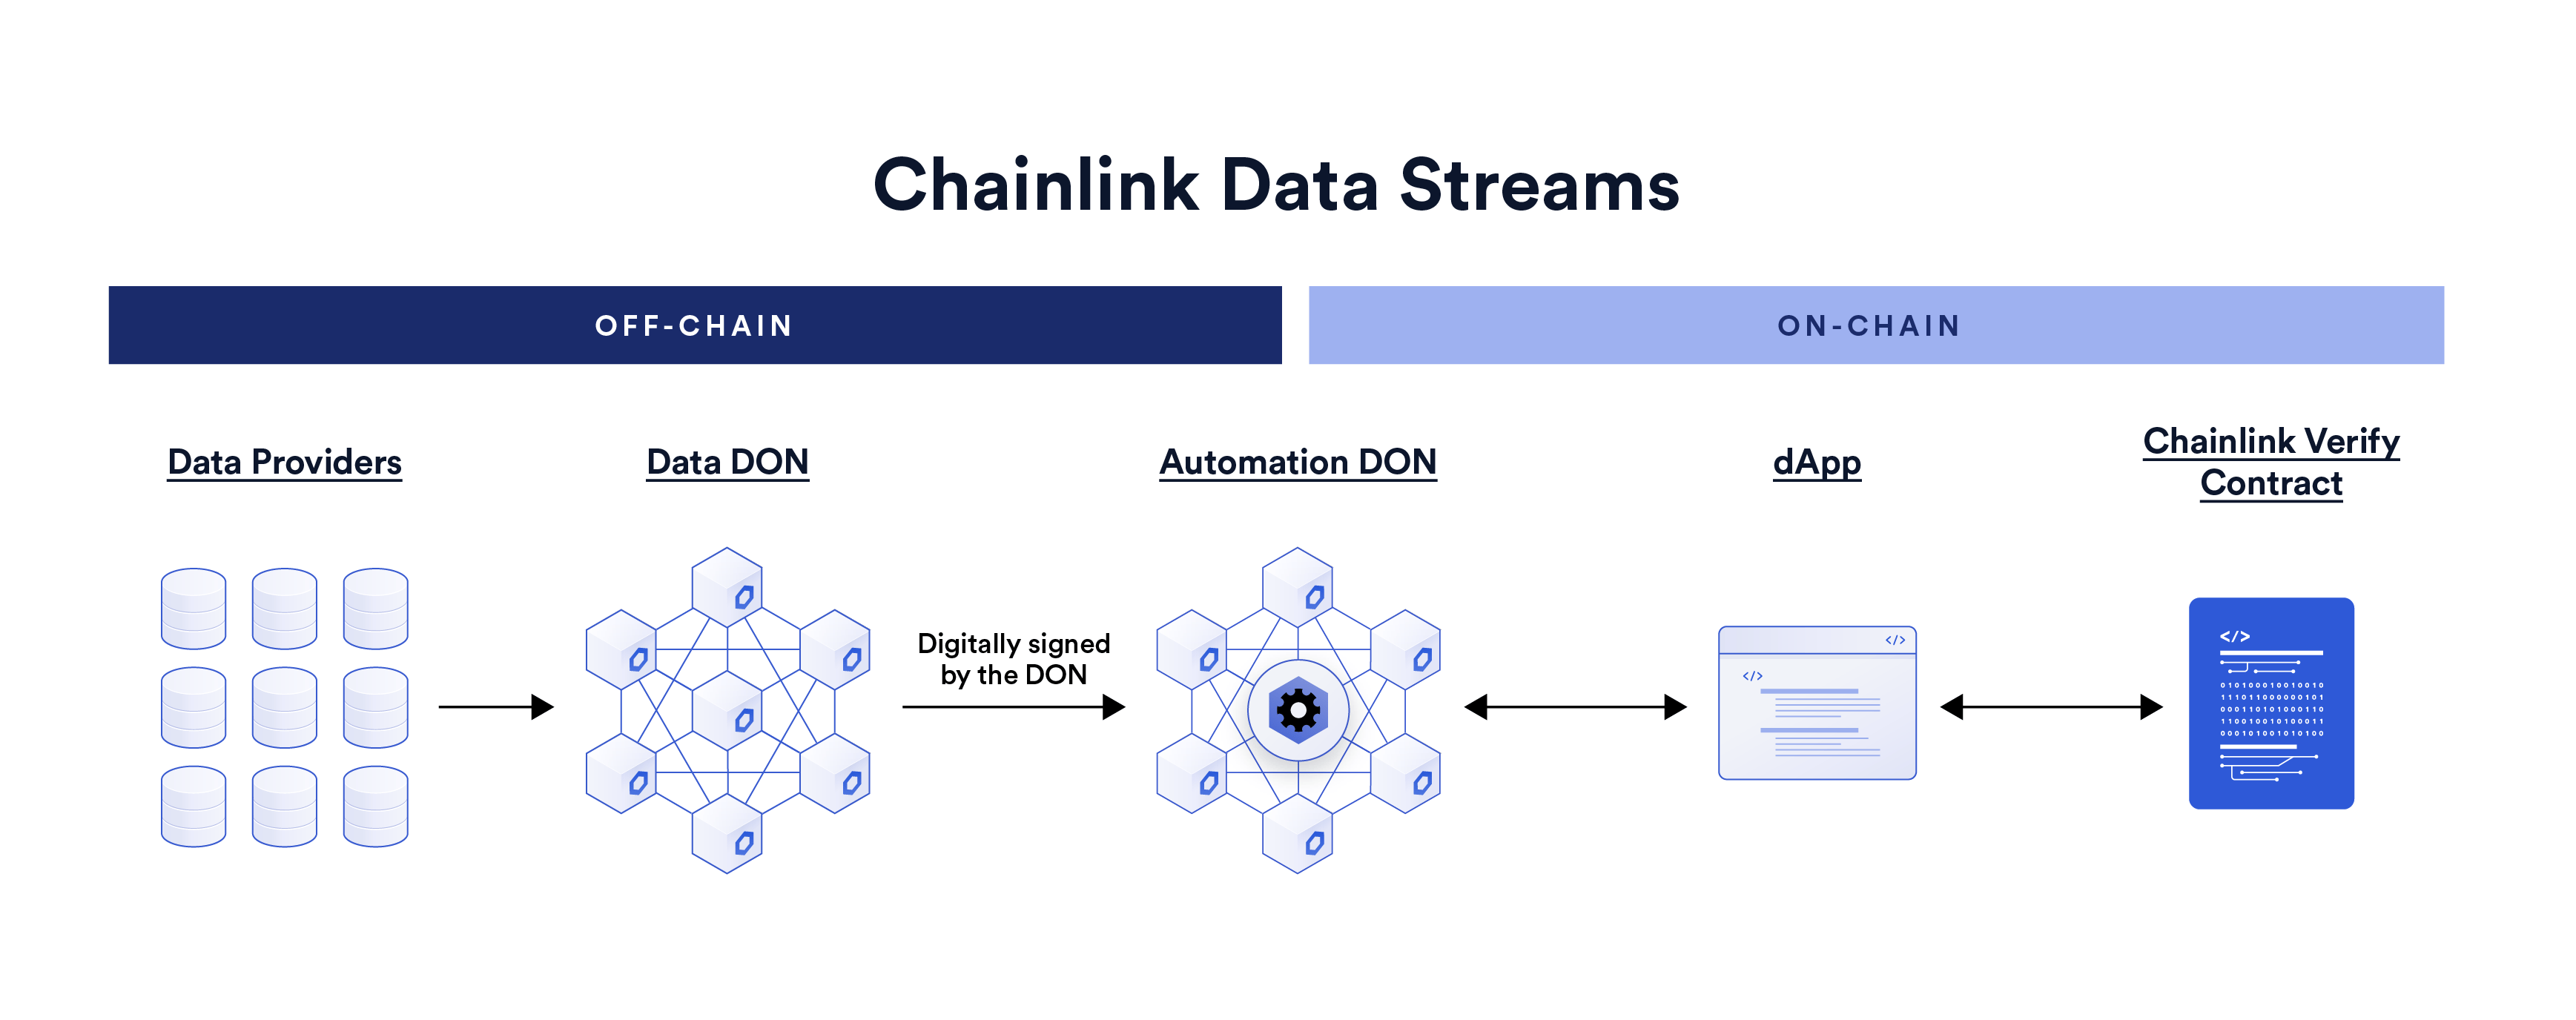 Chainlink Data Streams architecture